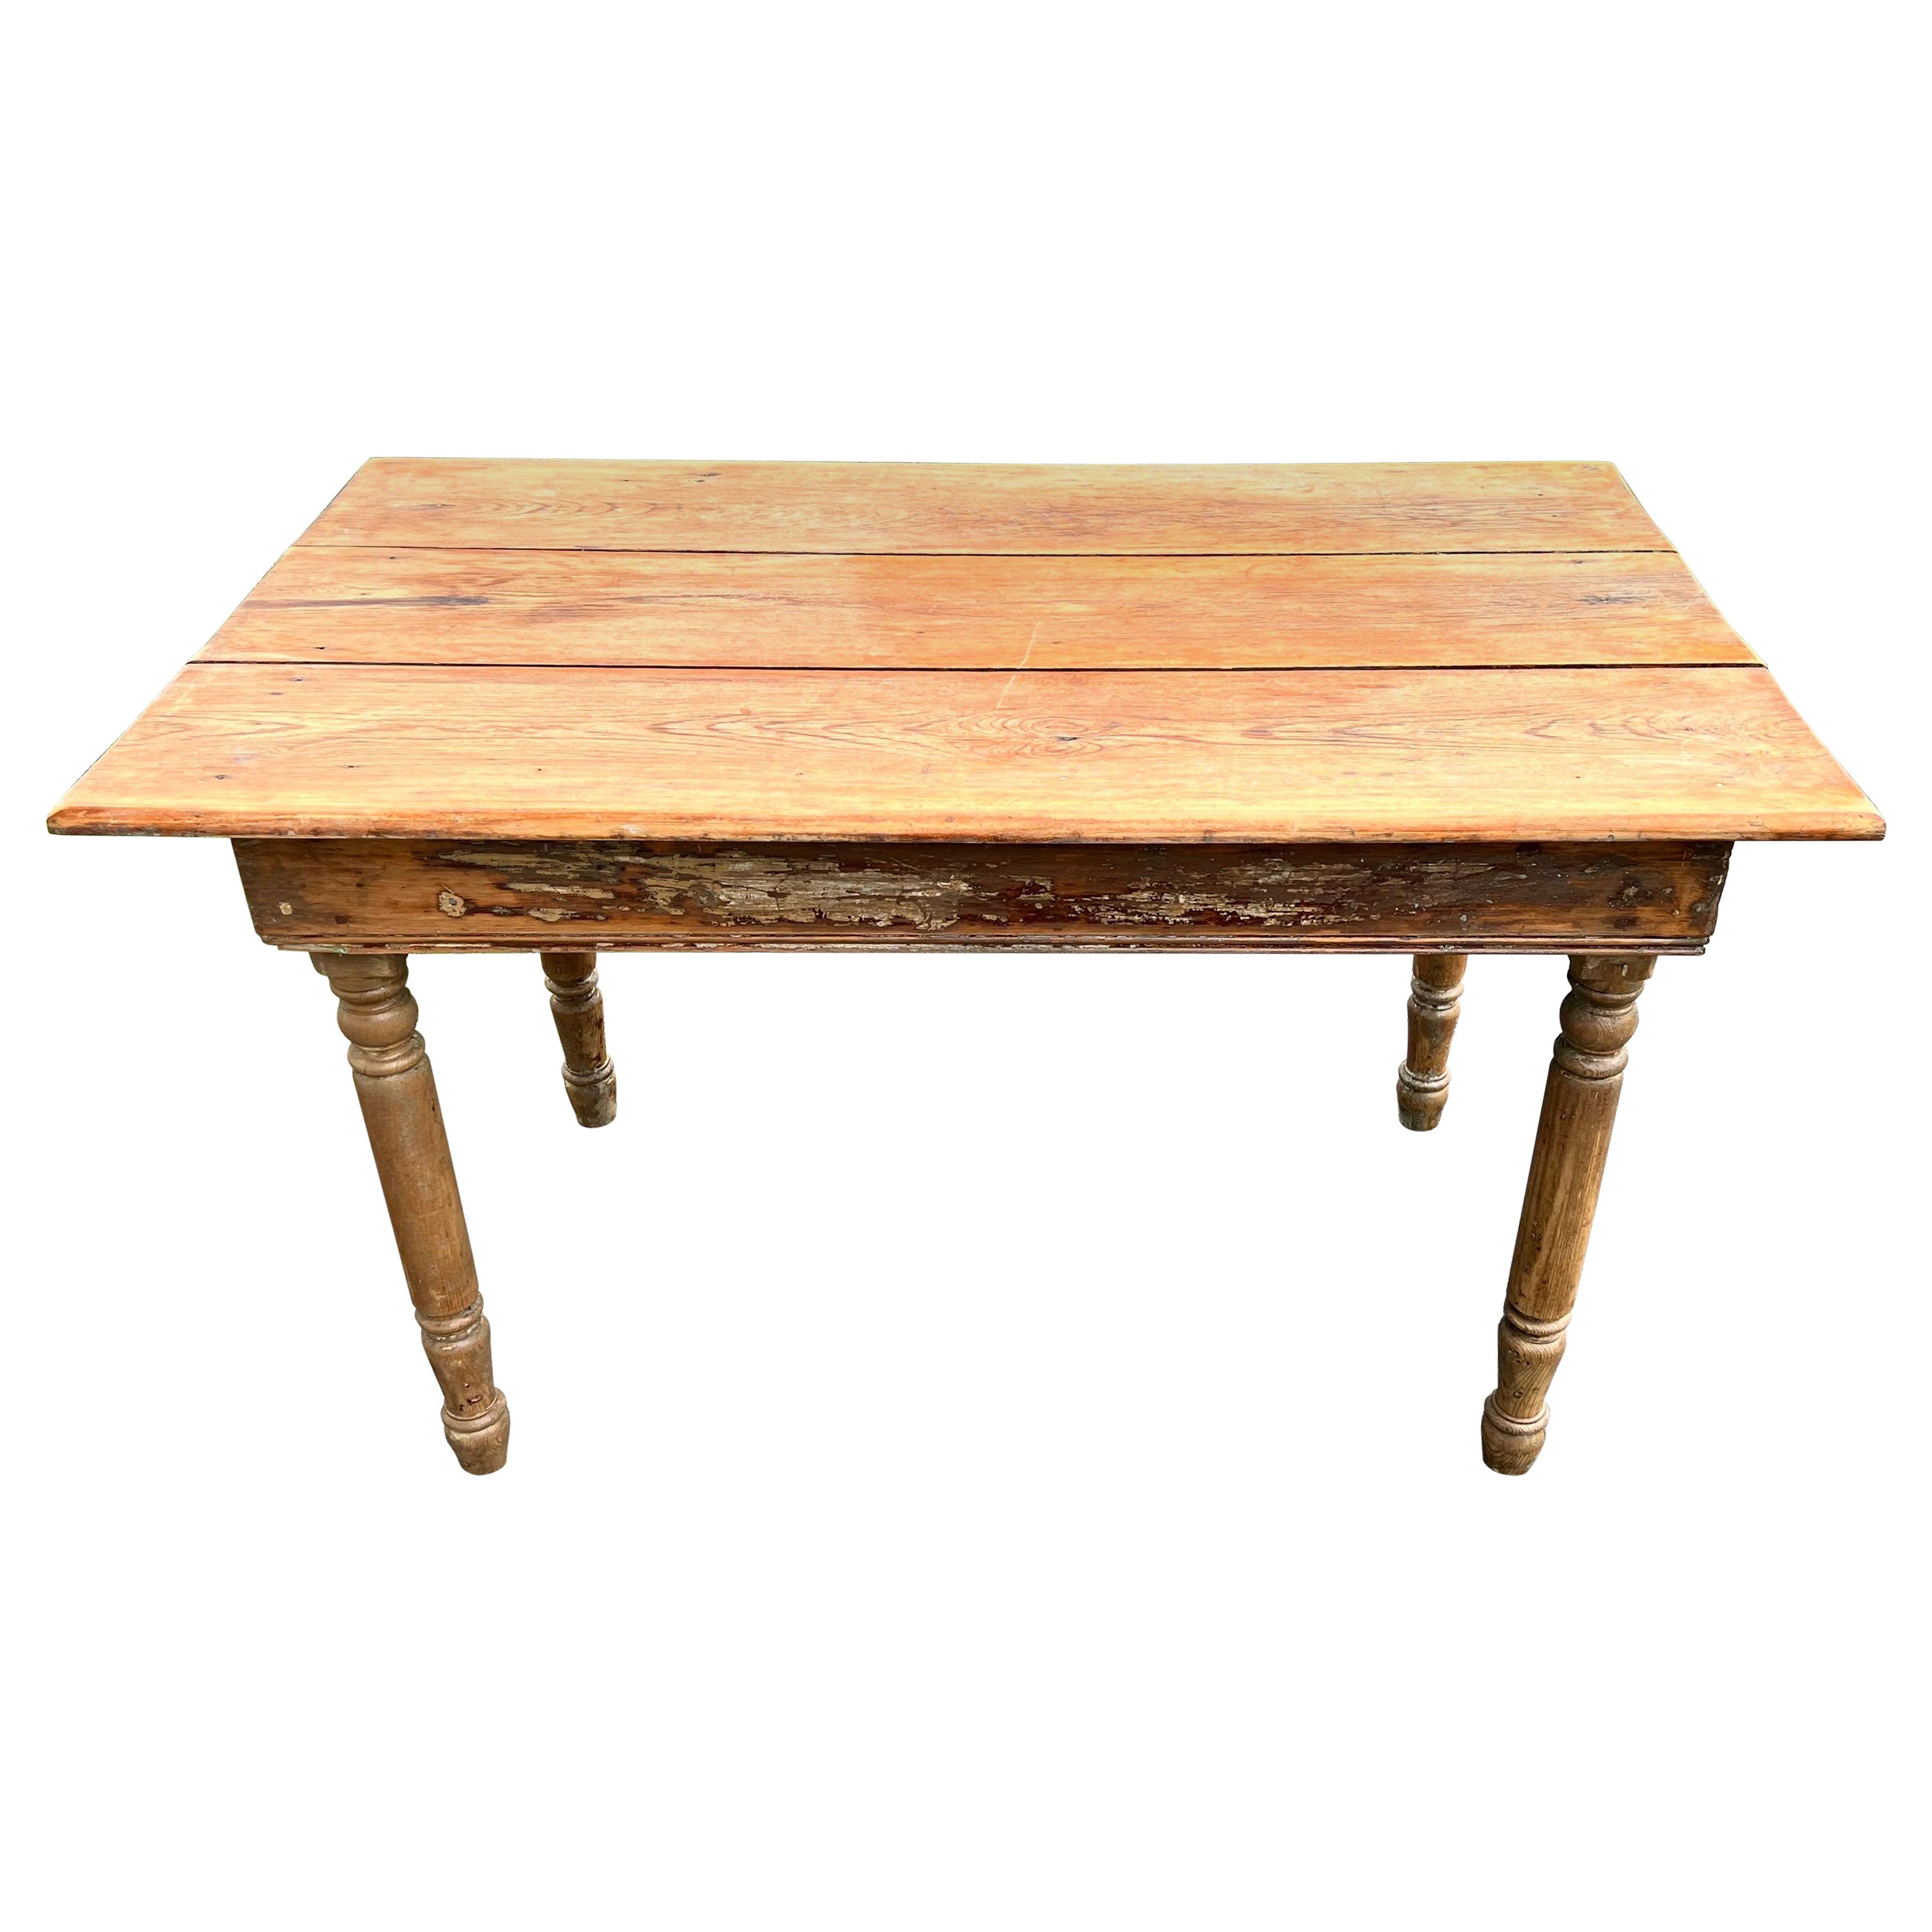 Late 19th Century Antique Pine Farmhouse Table